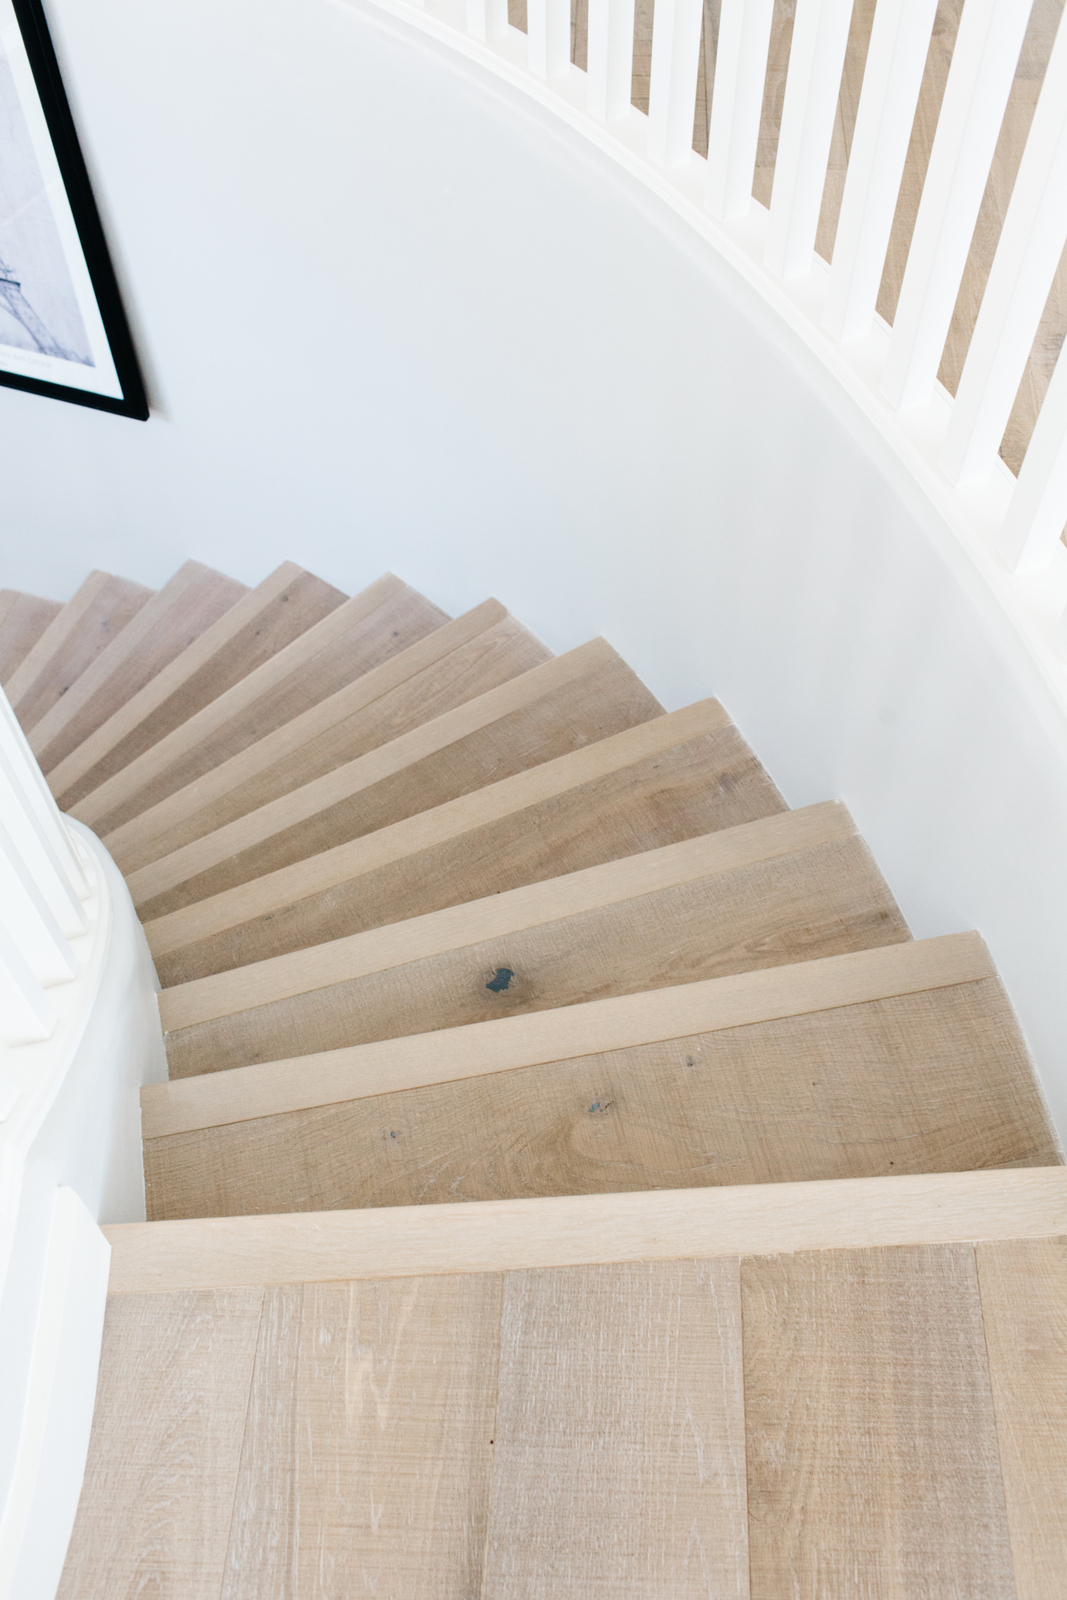 wood flooring on stairs 